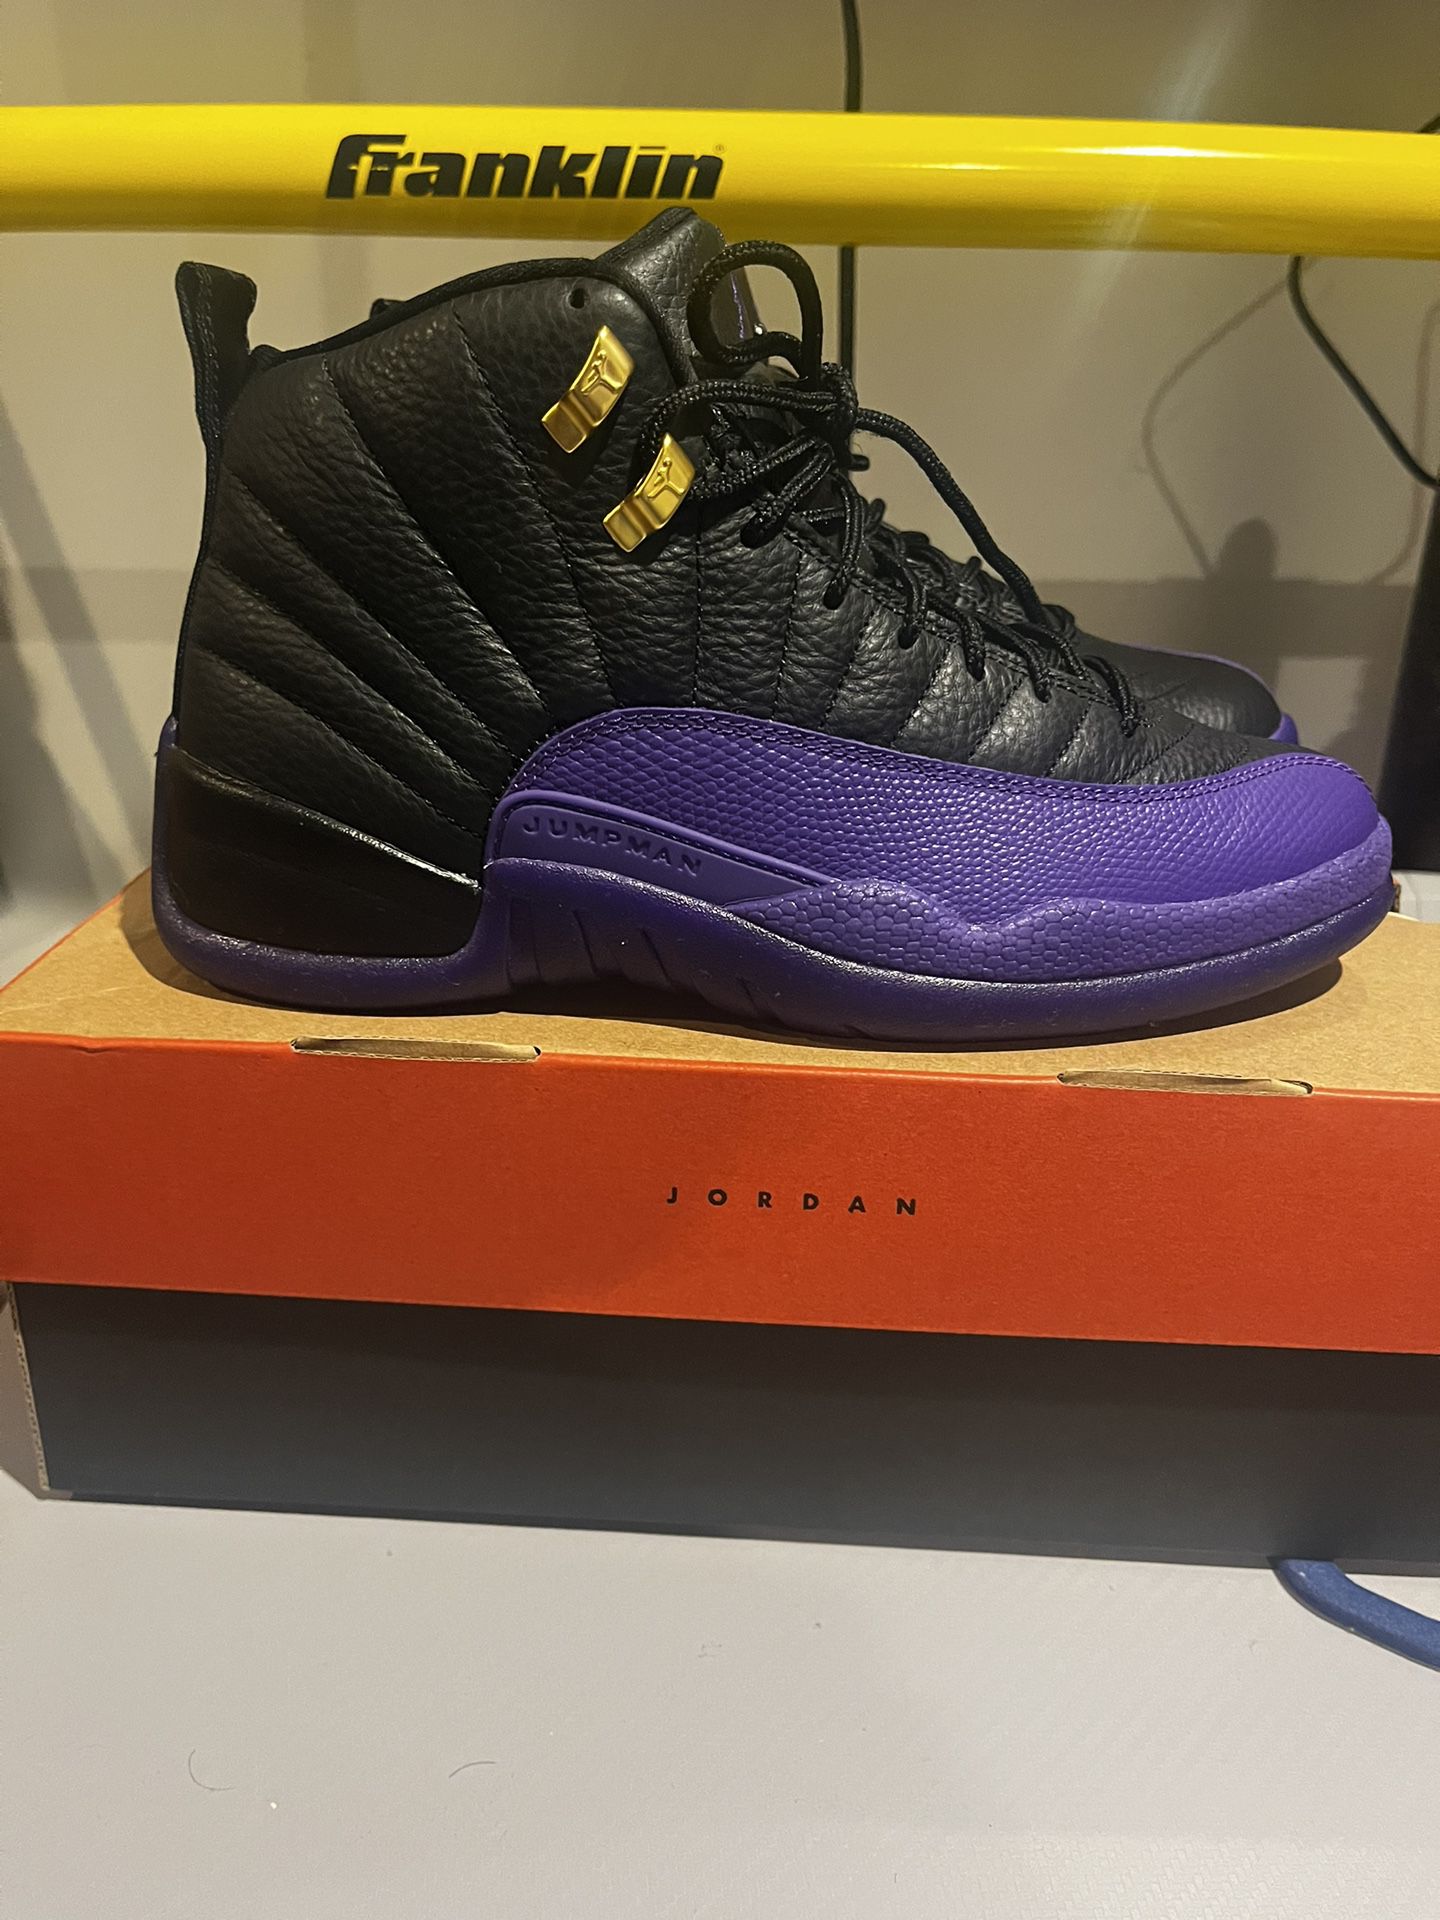 Air Jordan Retro 12s Field Purple With Box Good Condition Size 8 Men’s /Used